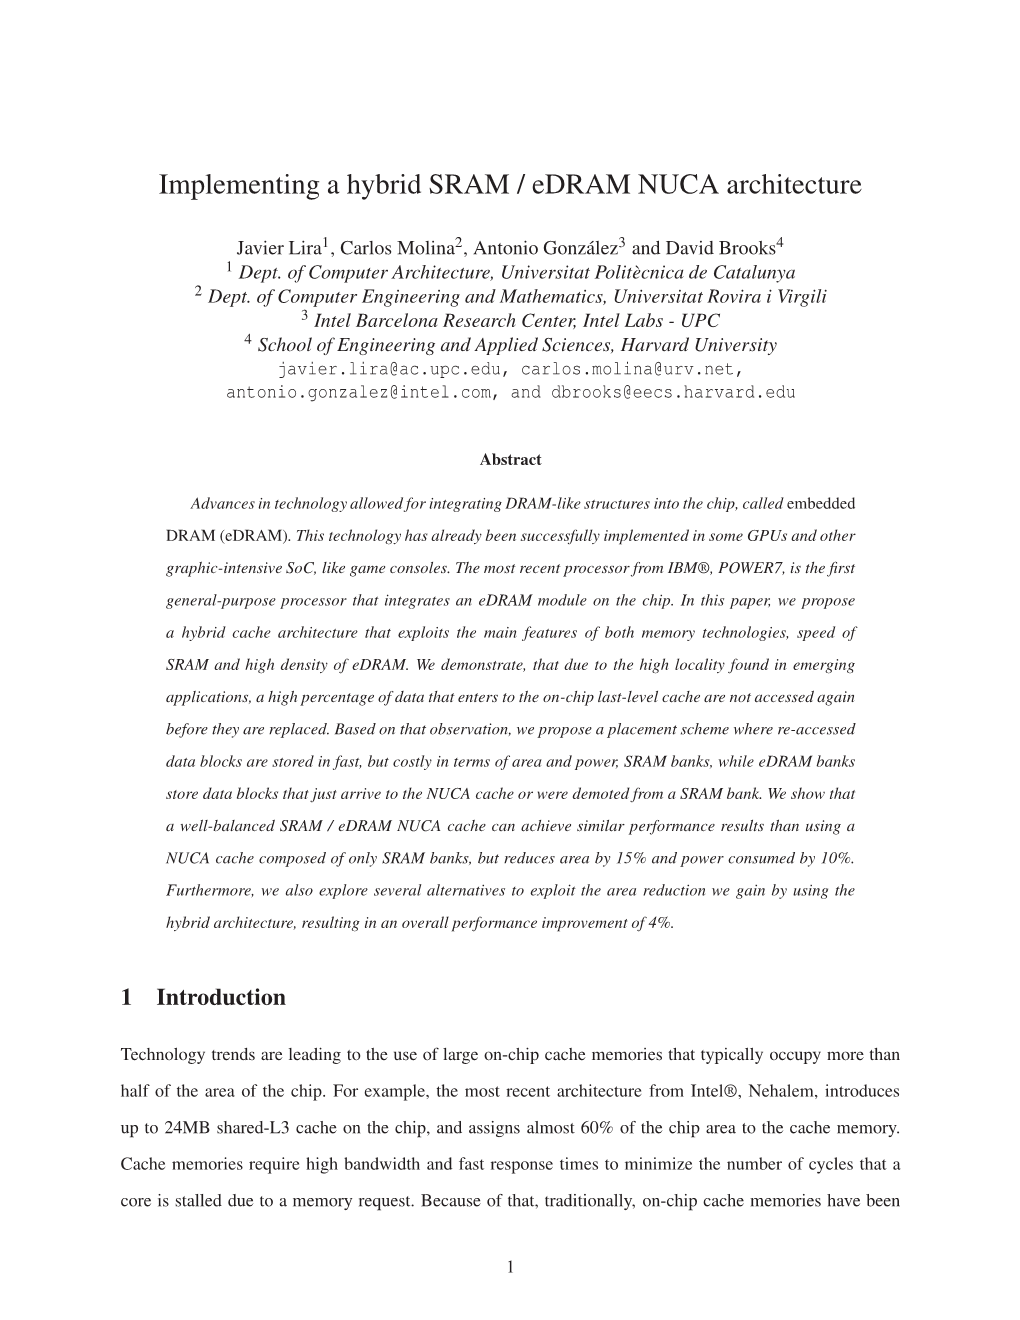 Implementing a Hybrid SRAM / Edram NUCA Architecture